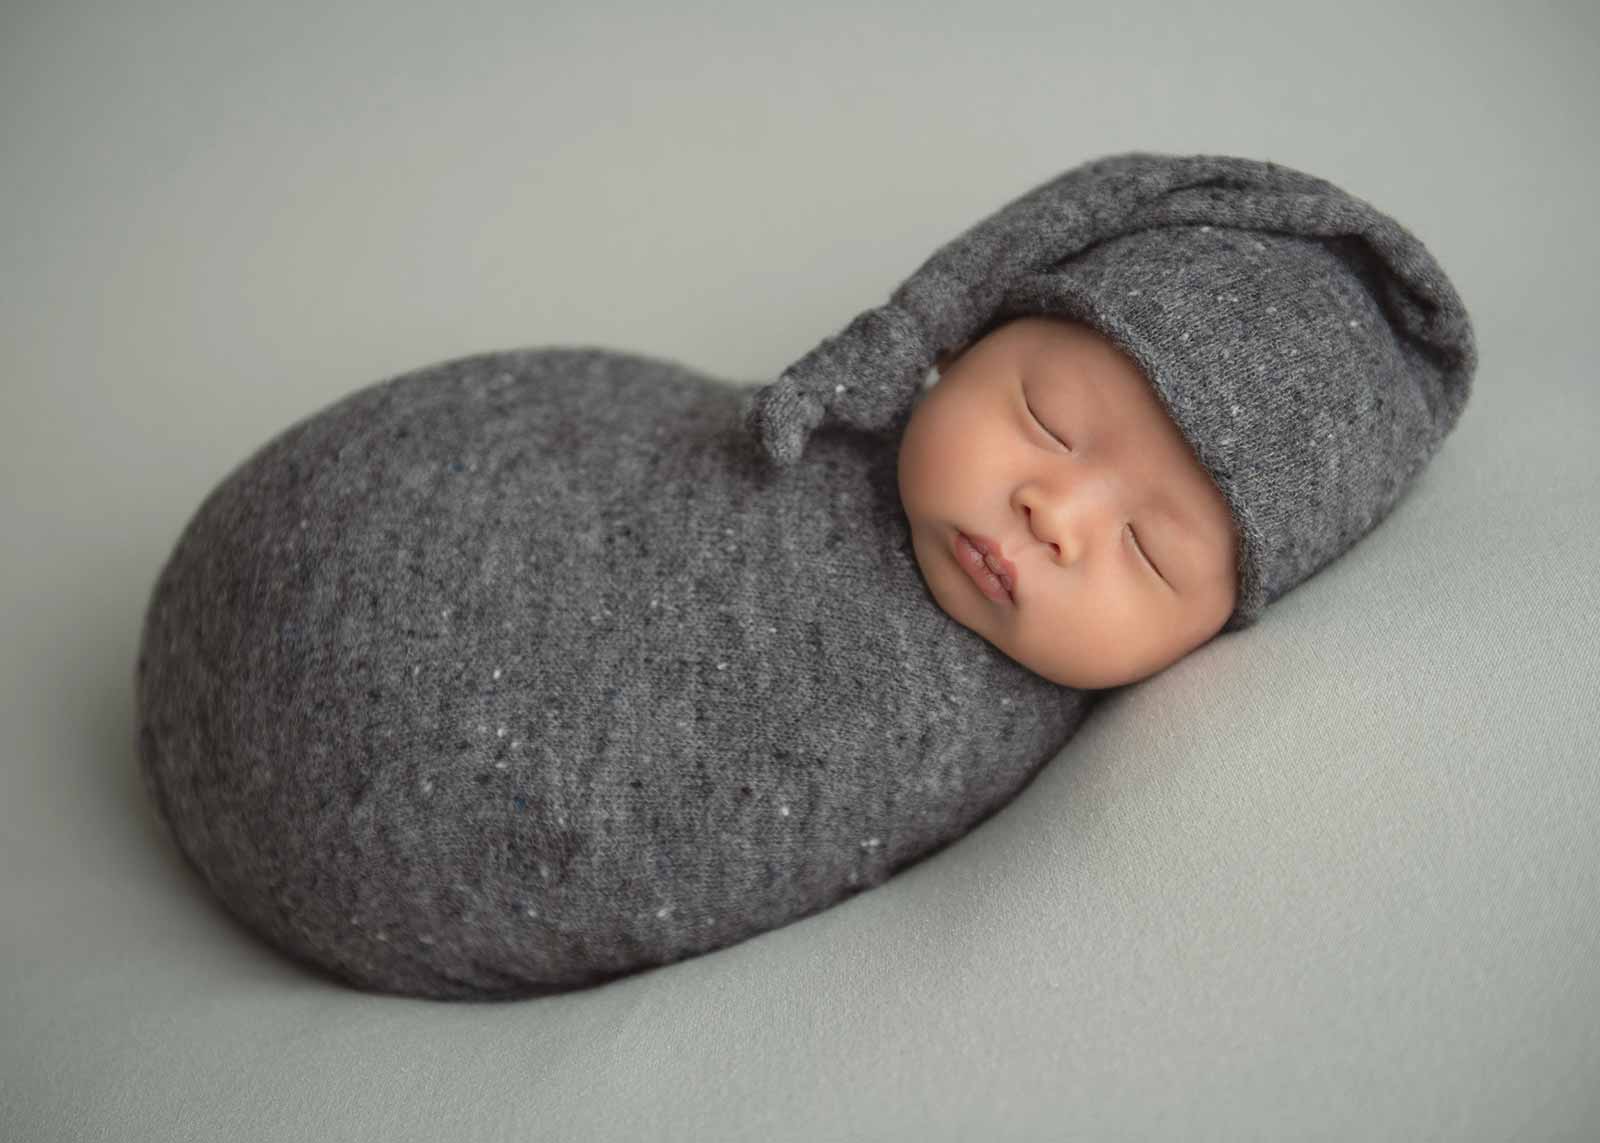 Newborn baby swaddled in gray sleeping peacefully